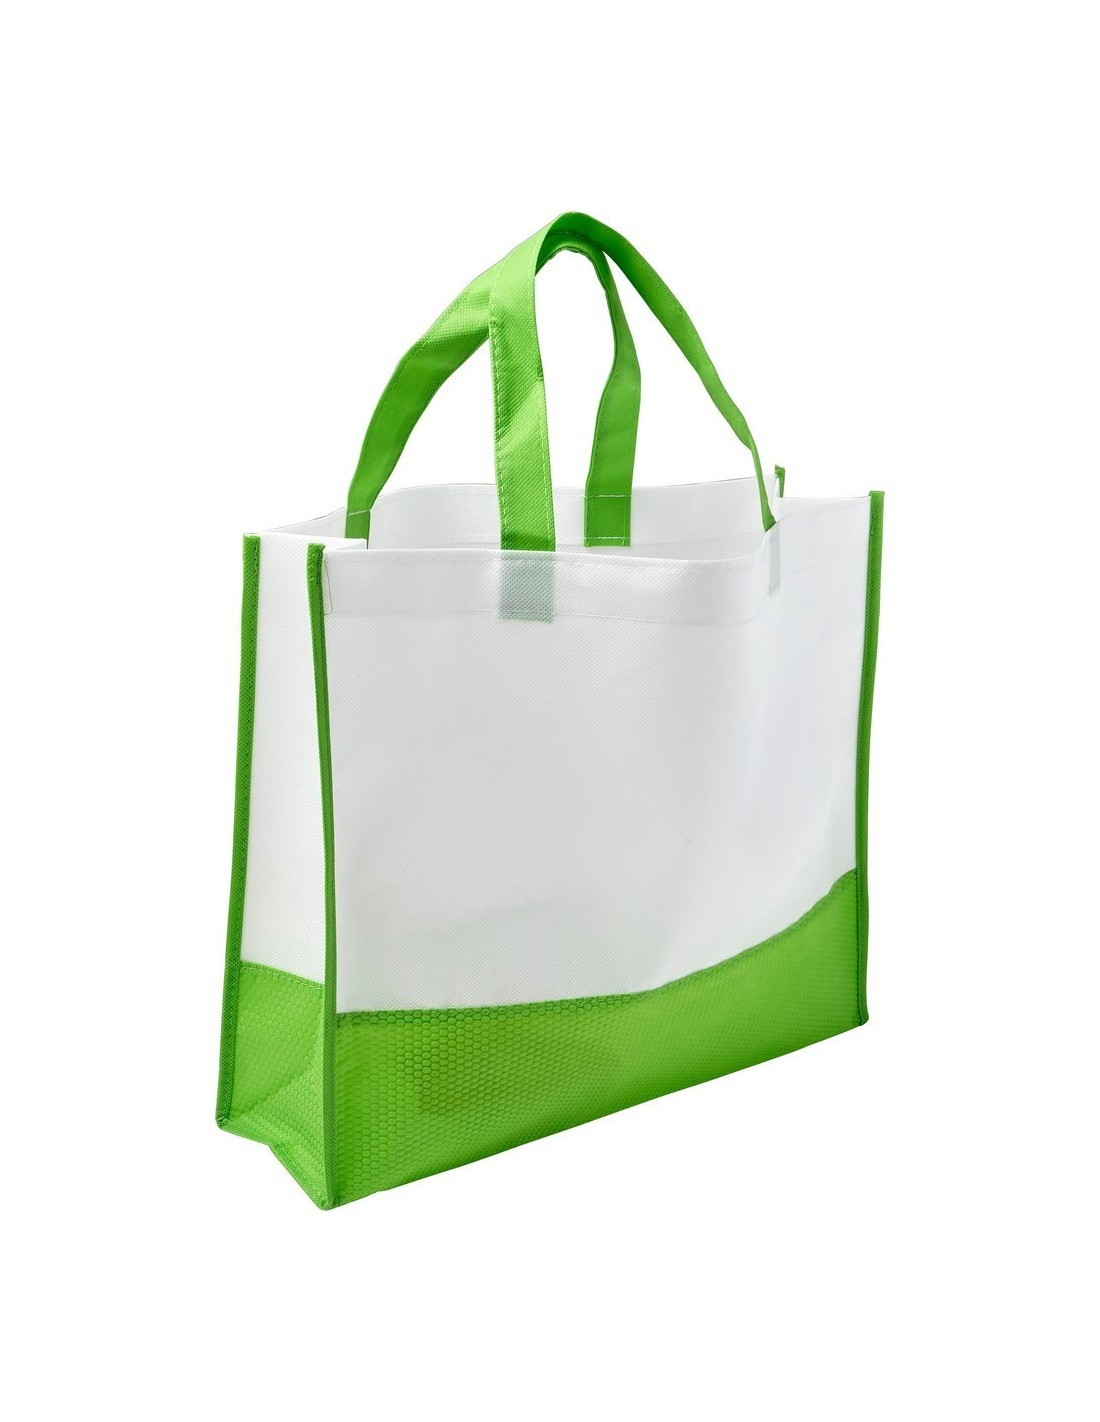 Bags shop 1. Сумка Shopper sh01/BL. Сумка shopping Bag. Шоппинг бэг сумка. Популярные сумки шопинги.